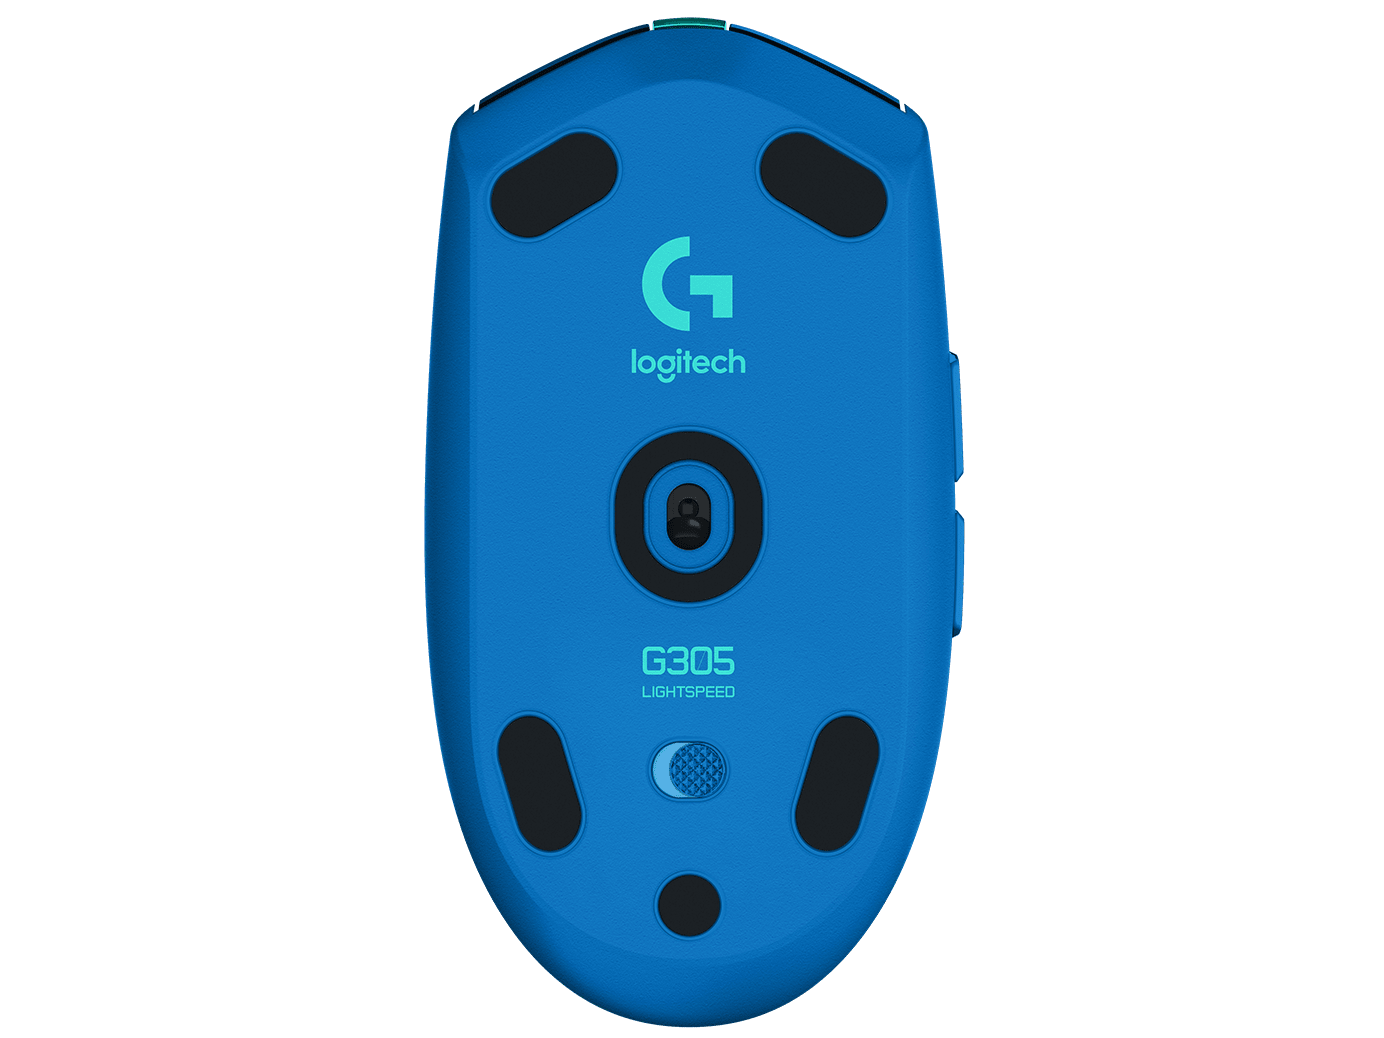 Mouse Inalambrico Logitech G305 Gaming LightSpeed Sensor HERO 12K dpi 6 Botones